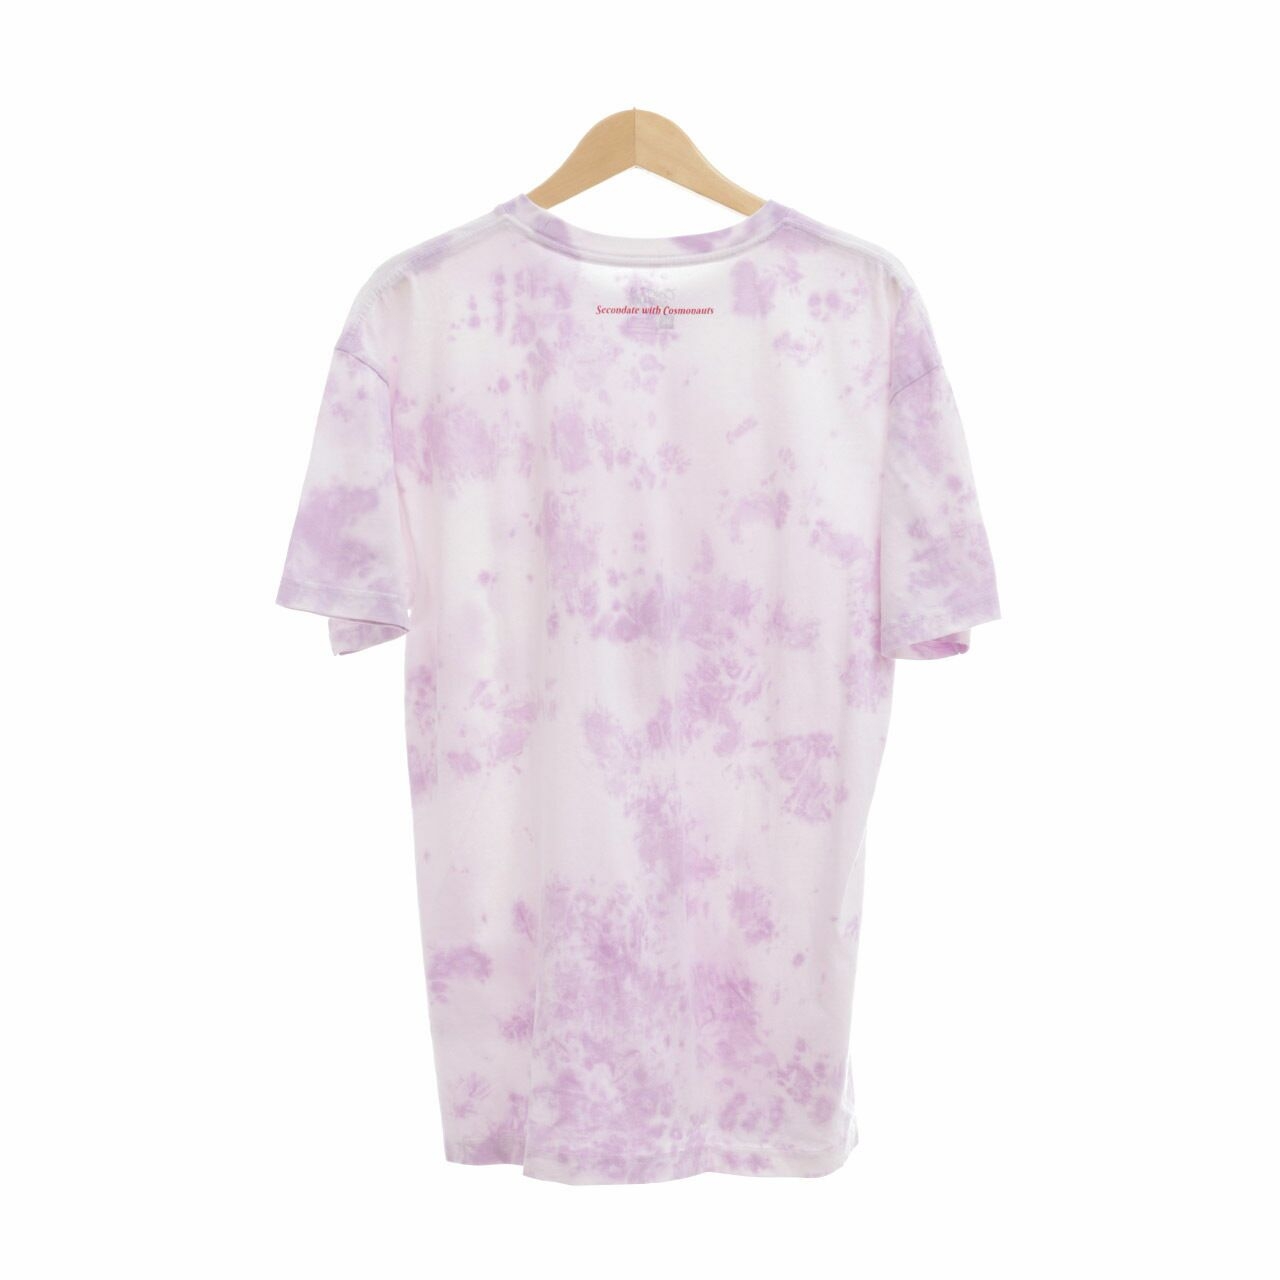 Cosmo Nauts White & Lilac Tie Dye T-Shirt